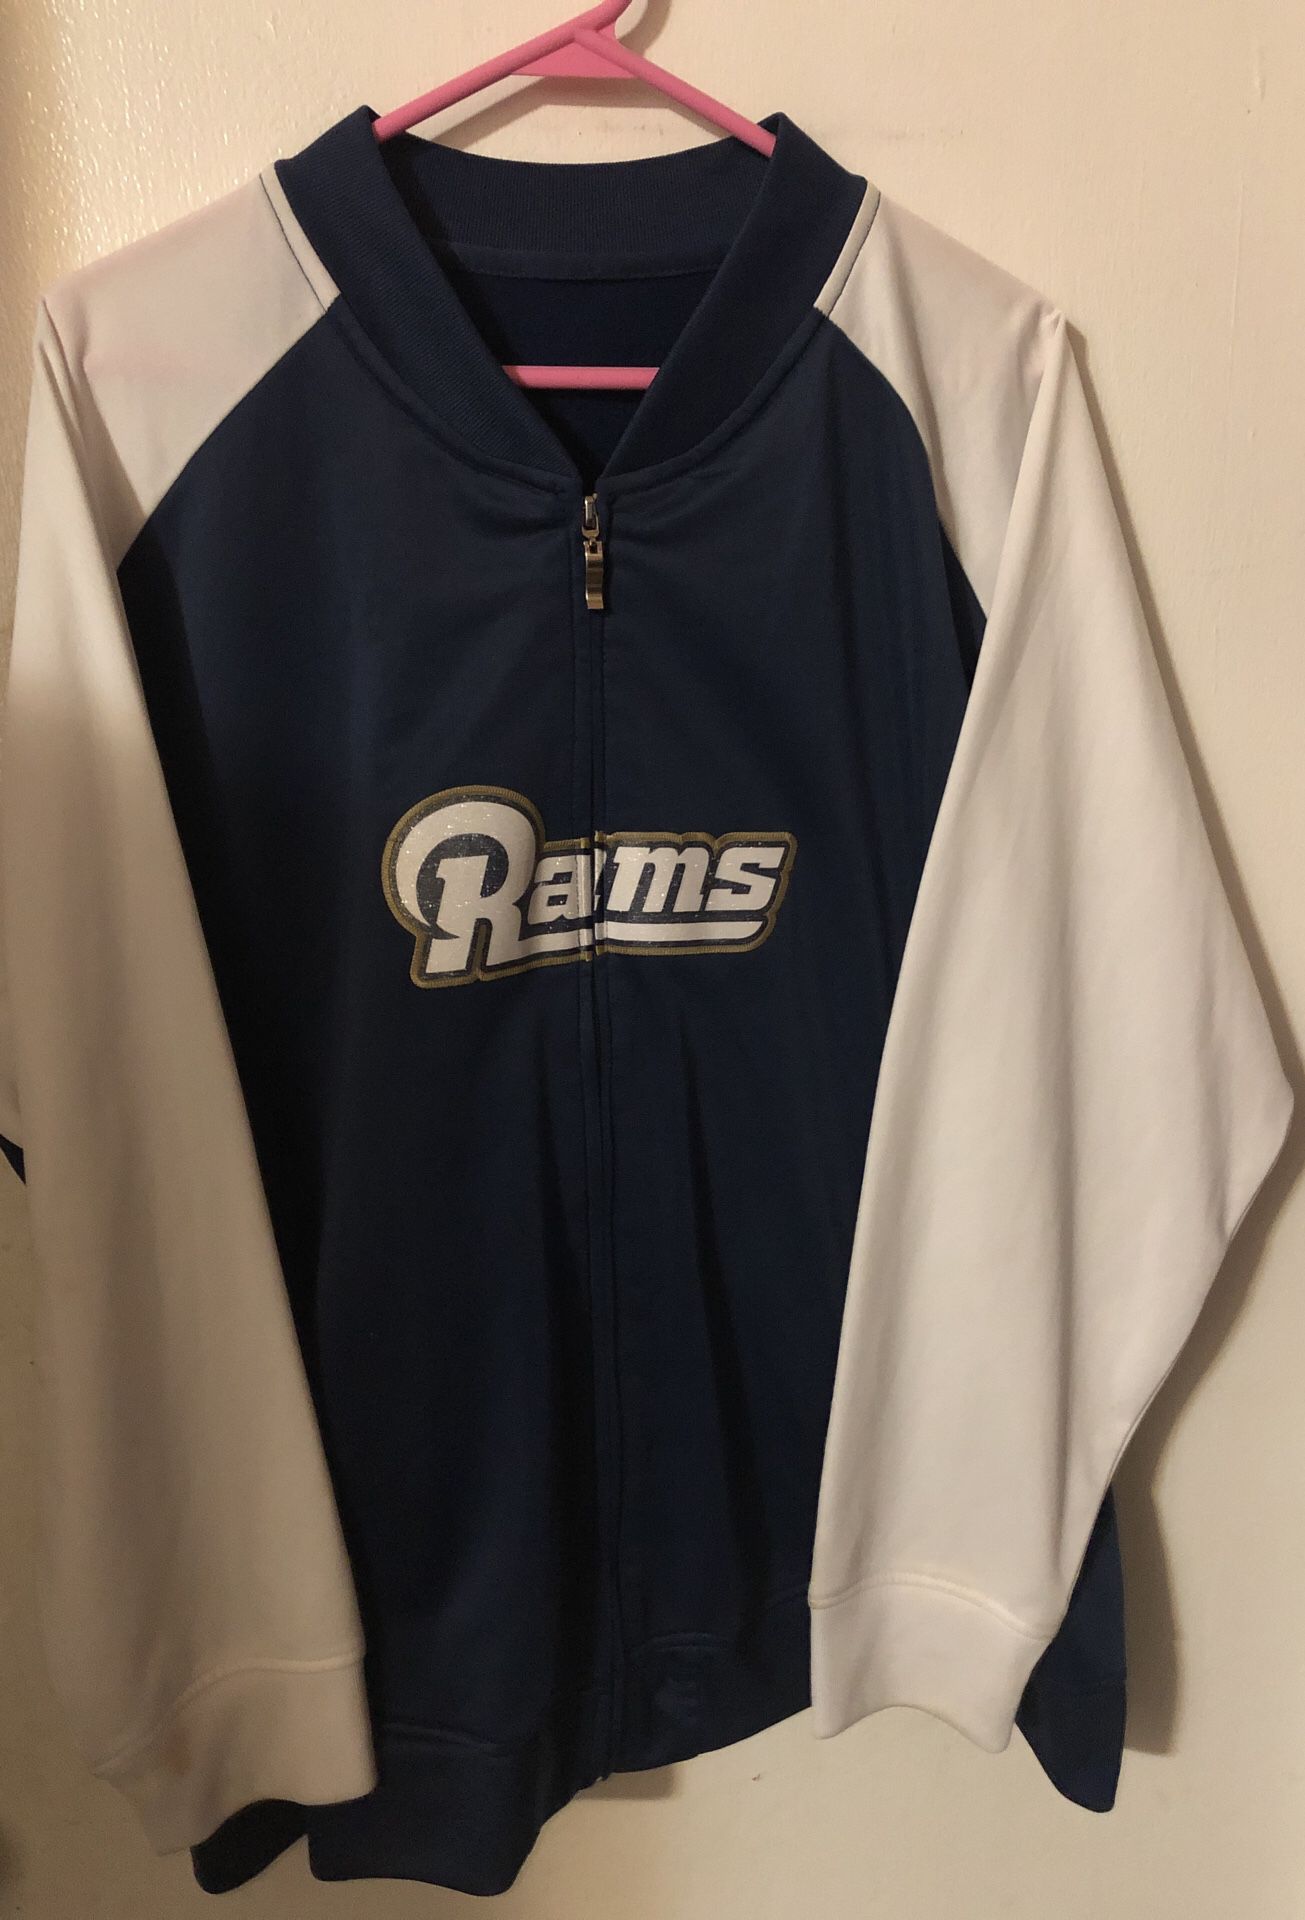 I Los Angeles Rams jacket